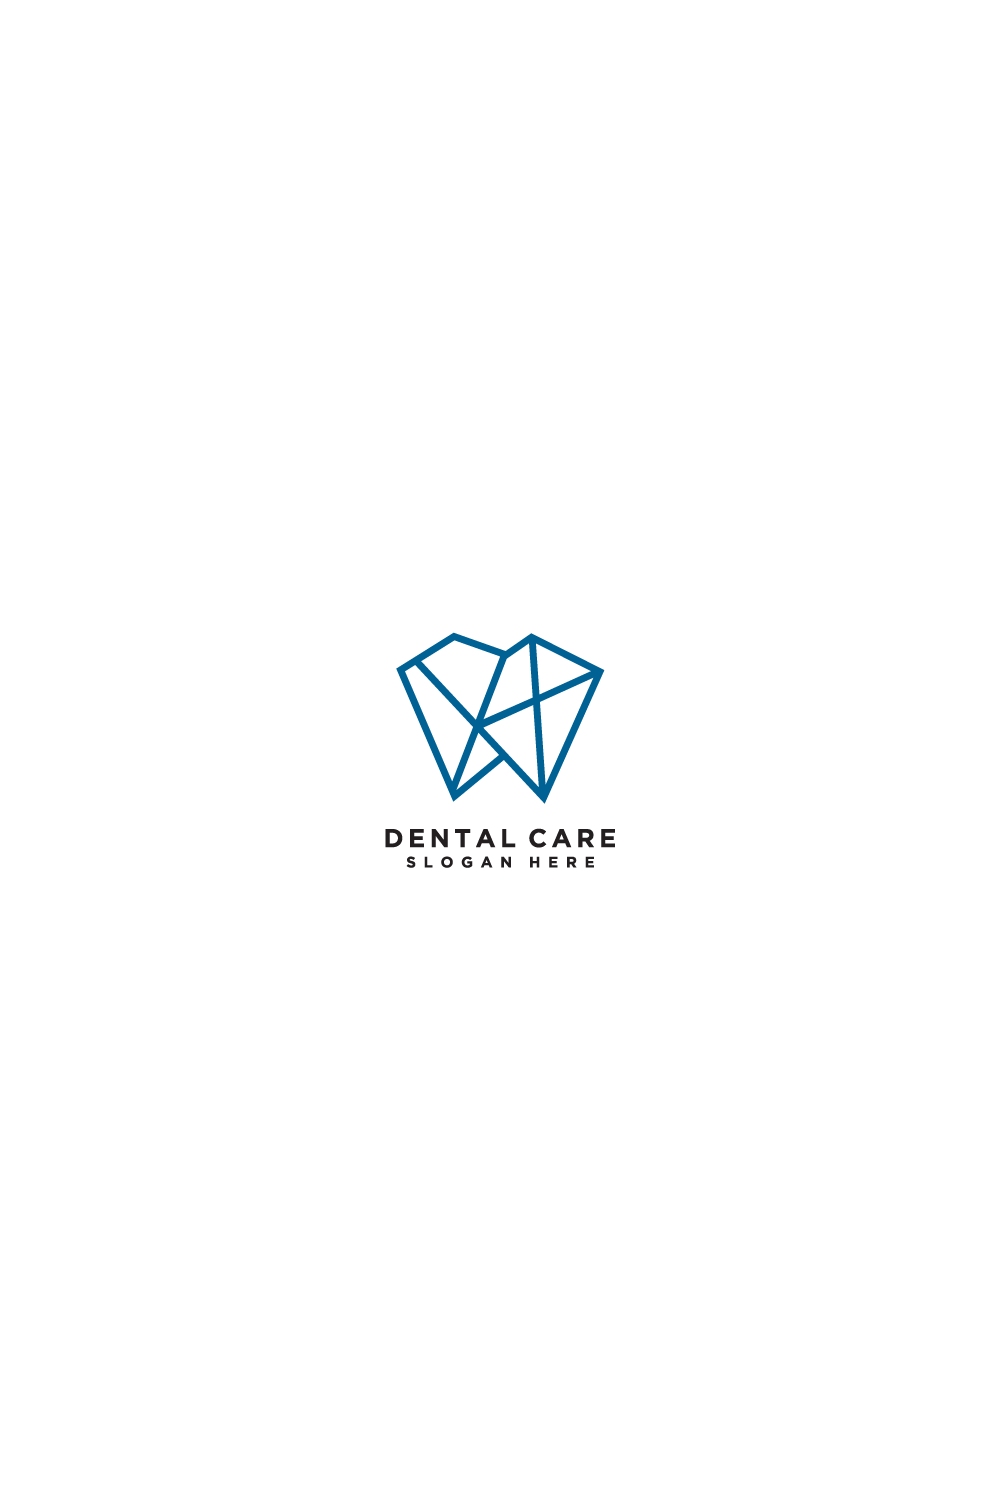 dental care logo design pinterest preview image.